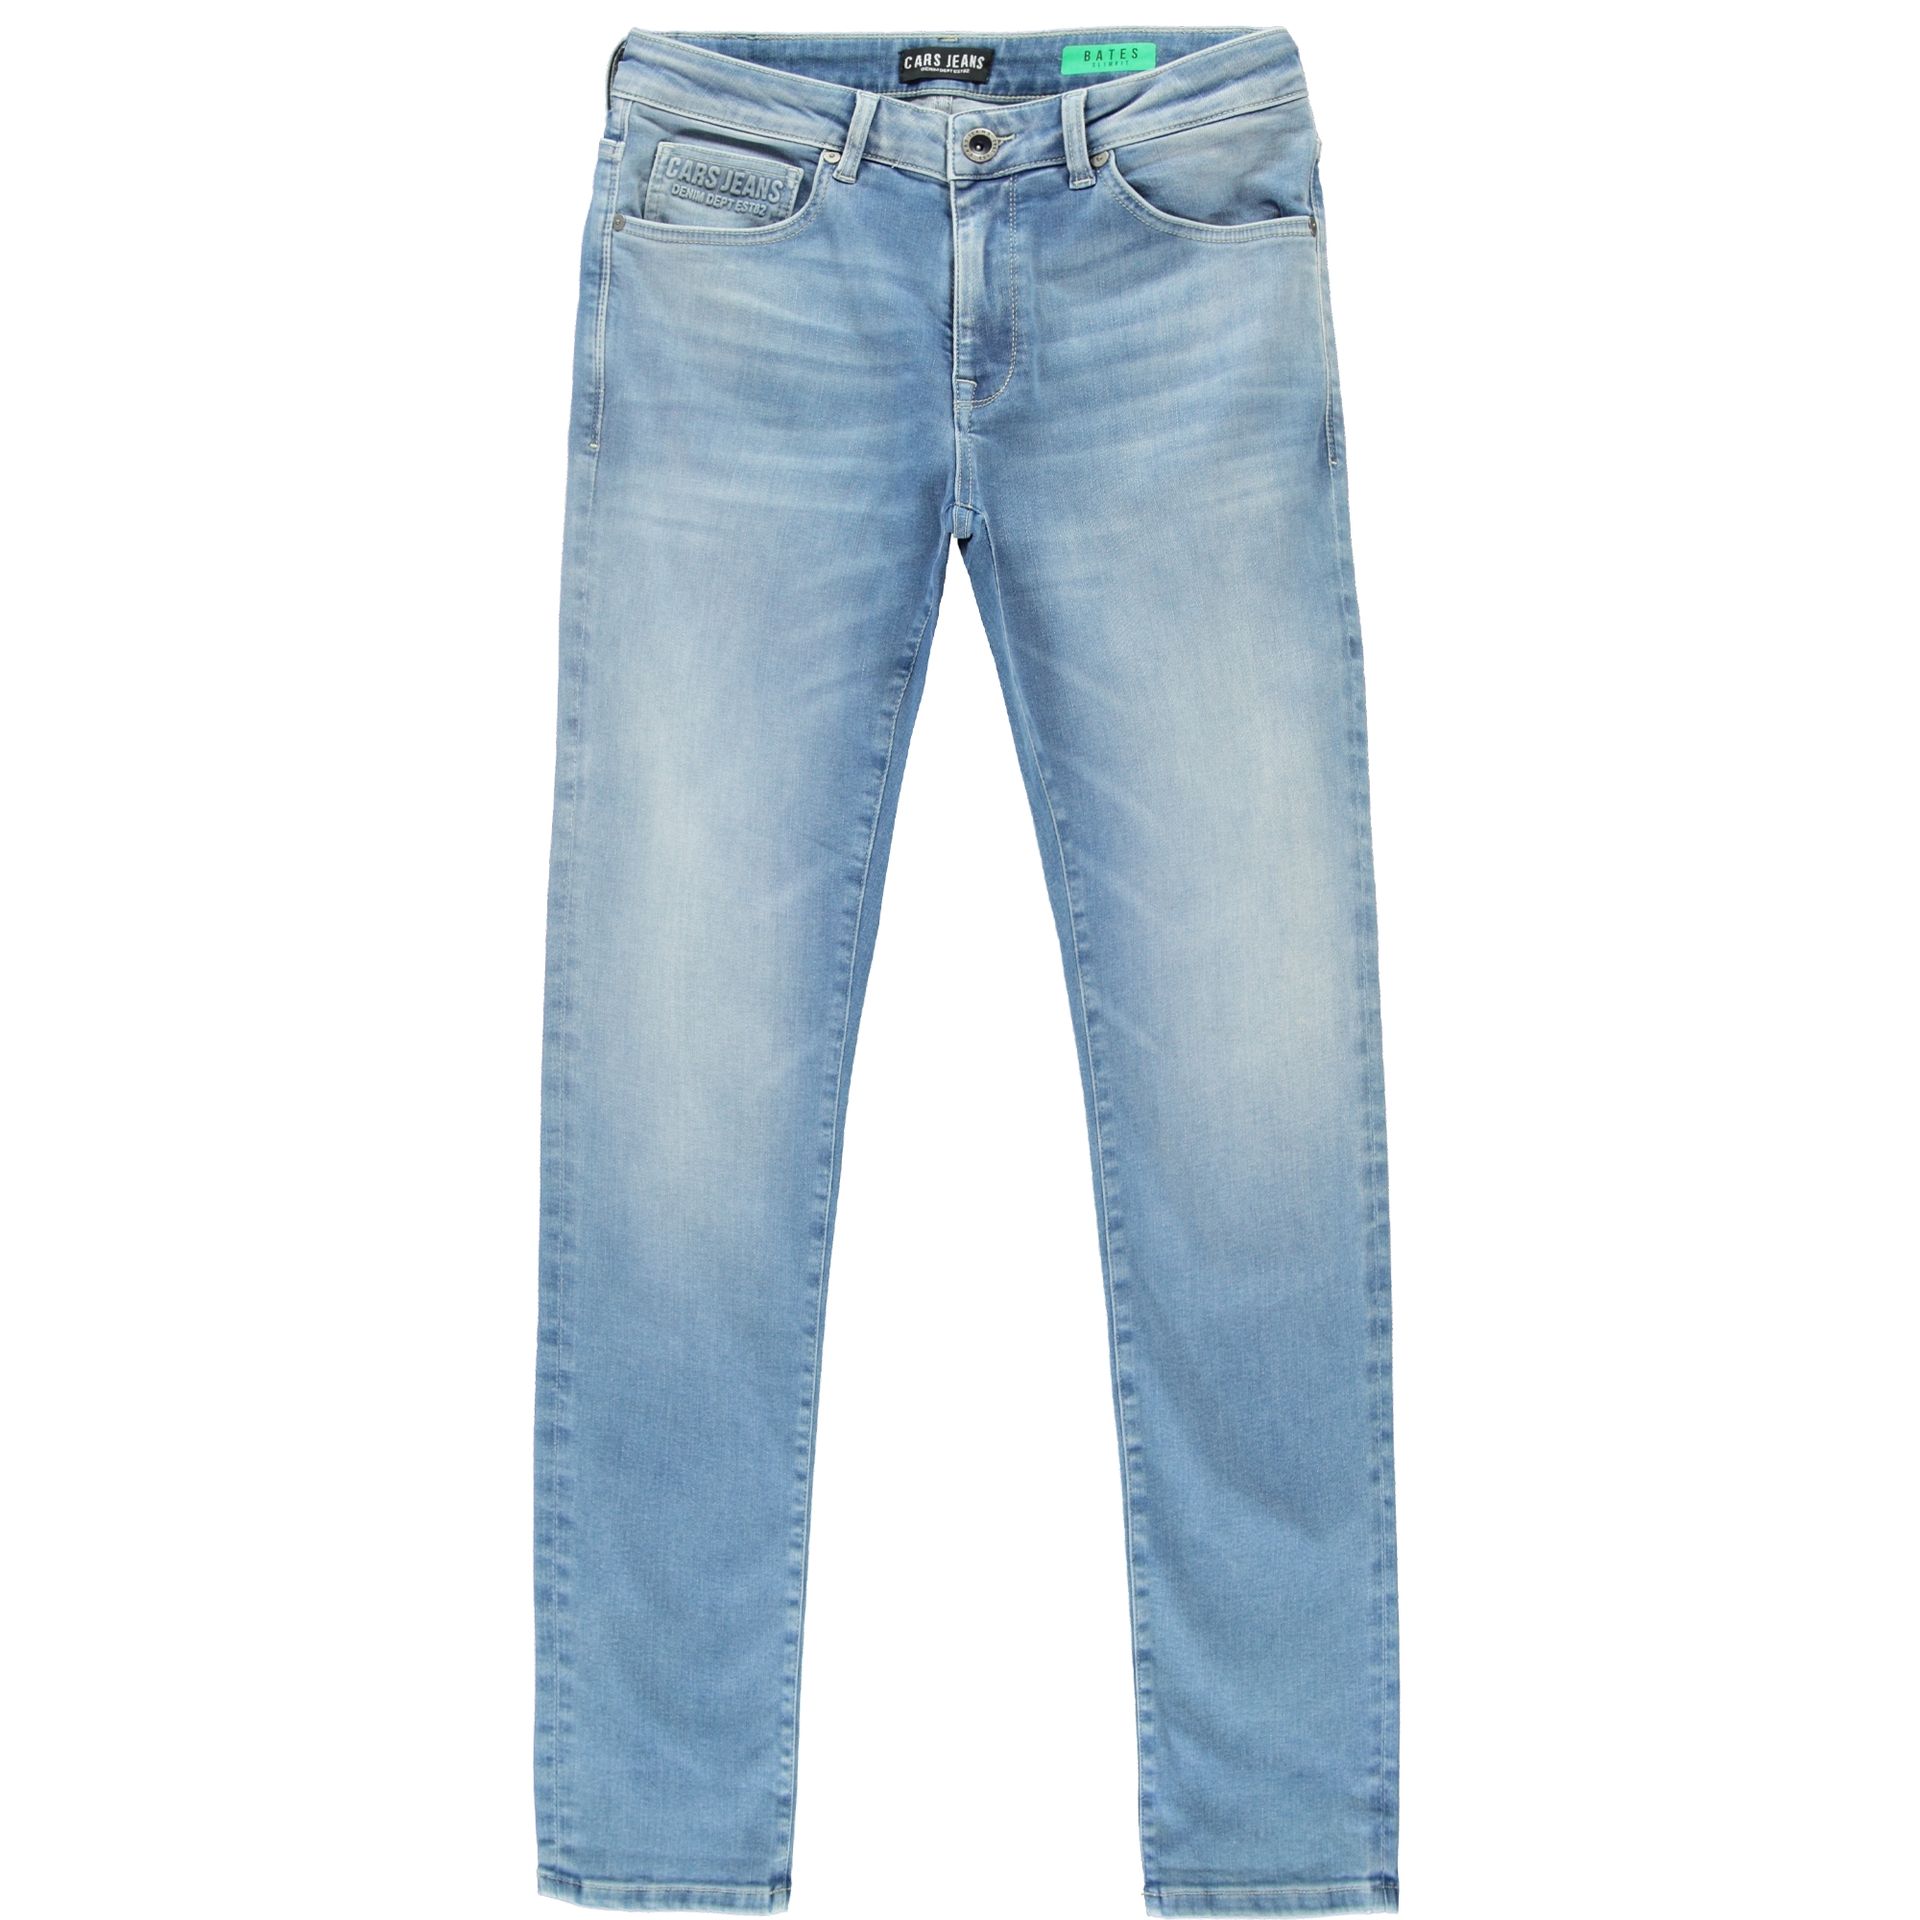 Cars jeans Jeans Bates Slim fit 95 porto wash 00108286-EKA03000200000021